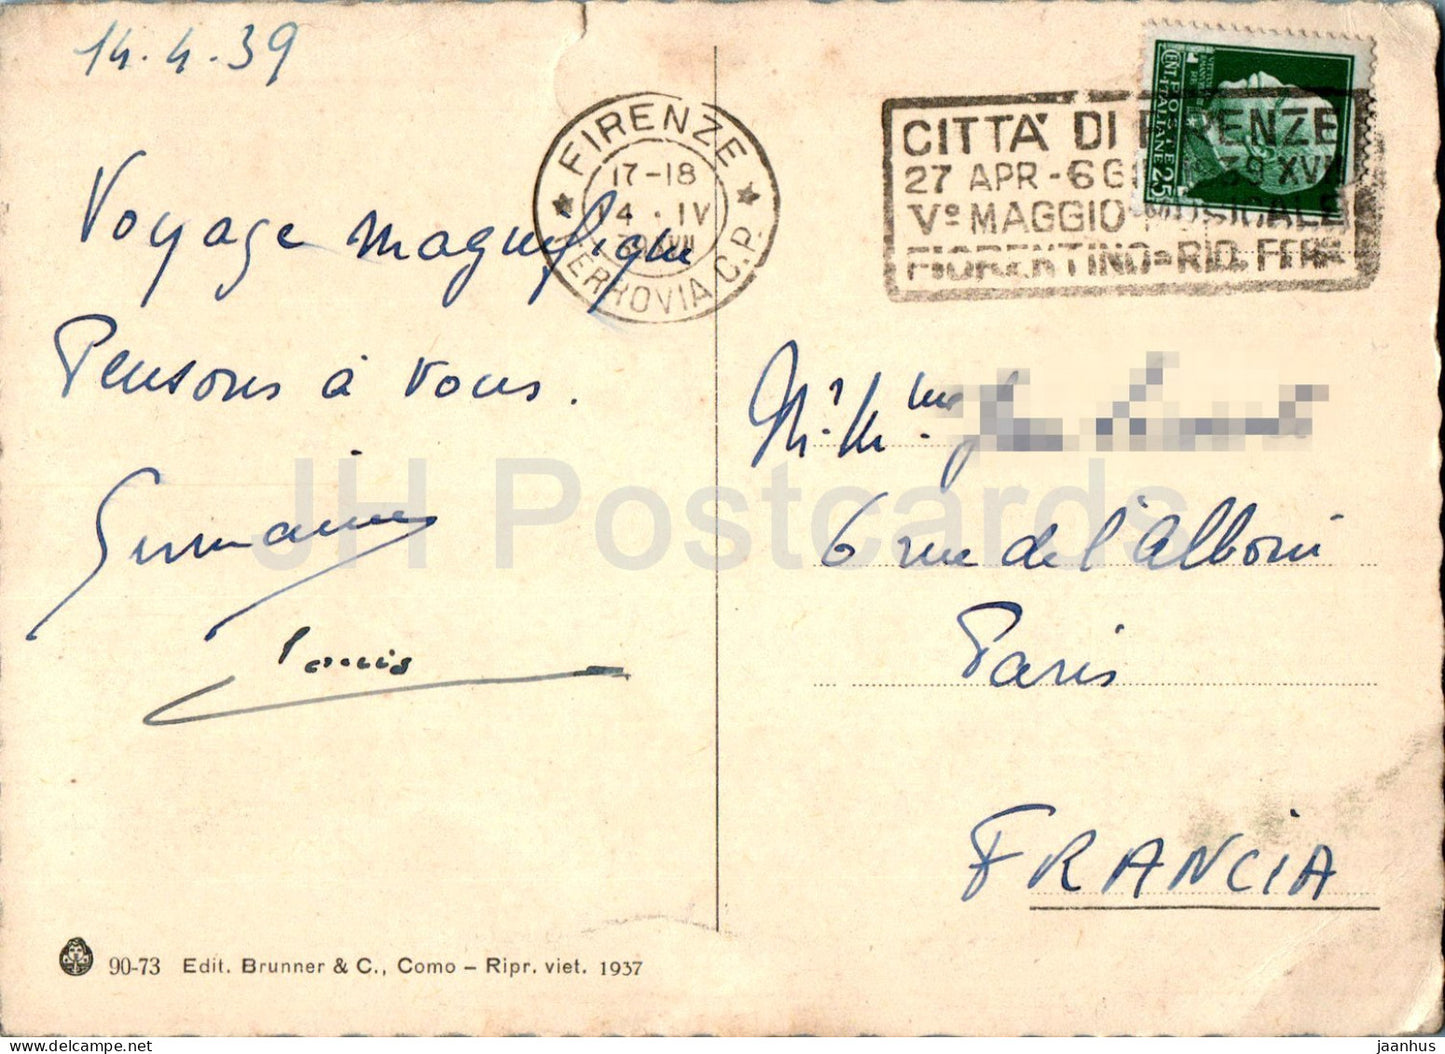 Firenze - Florenz - L'Arno e veduta dei Ponti - Fluss - Brücke - 90-73 - alte Postkarte - 1939 - Italien - gebraucht 